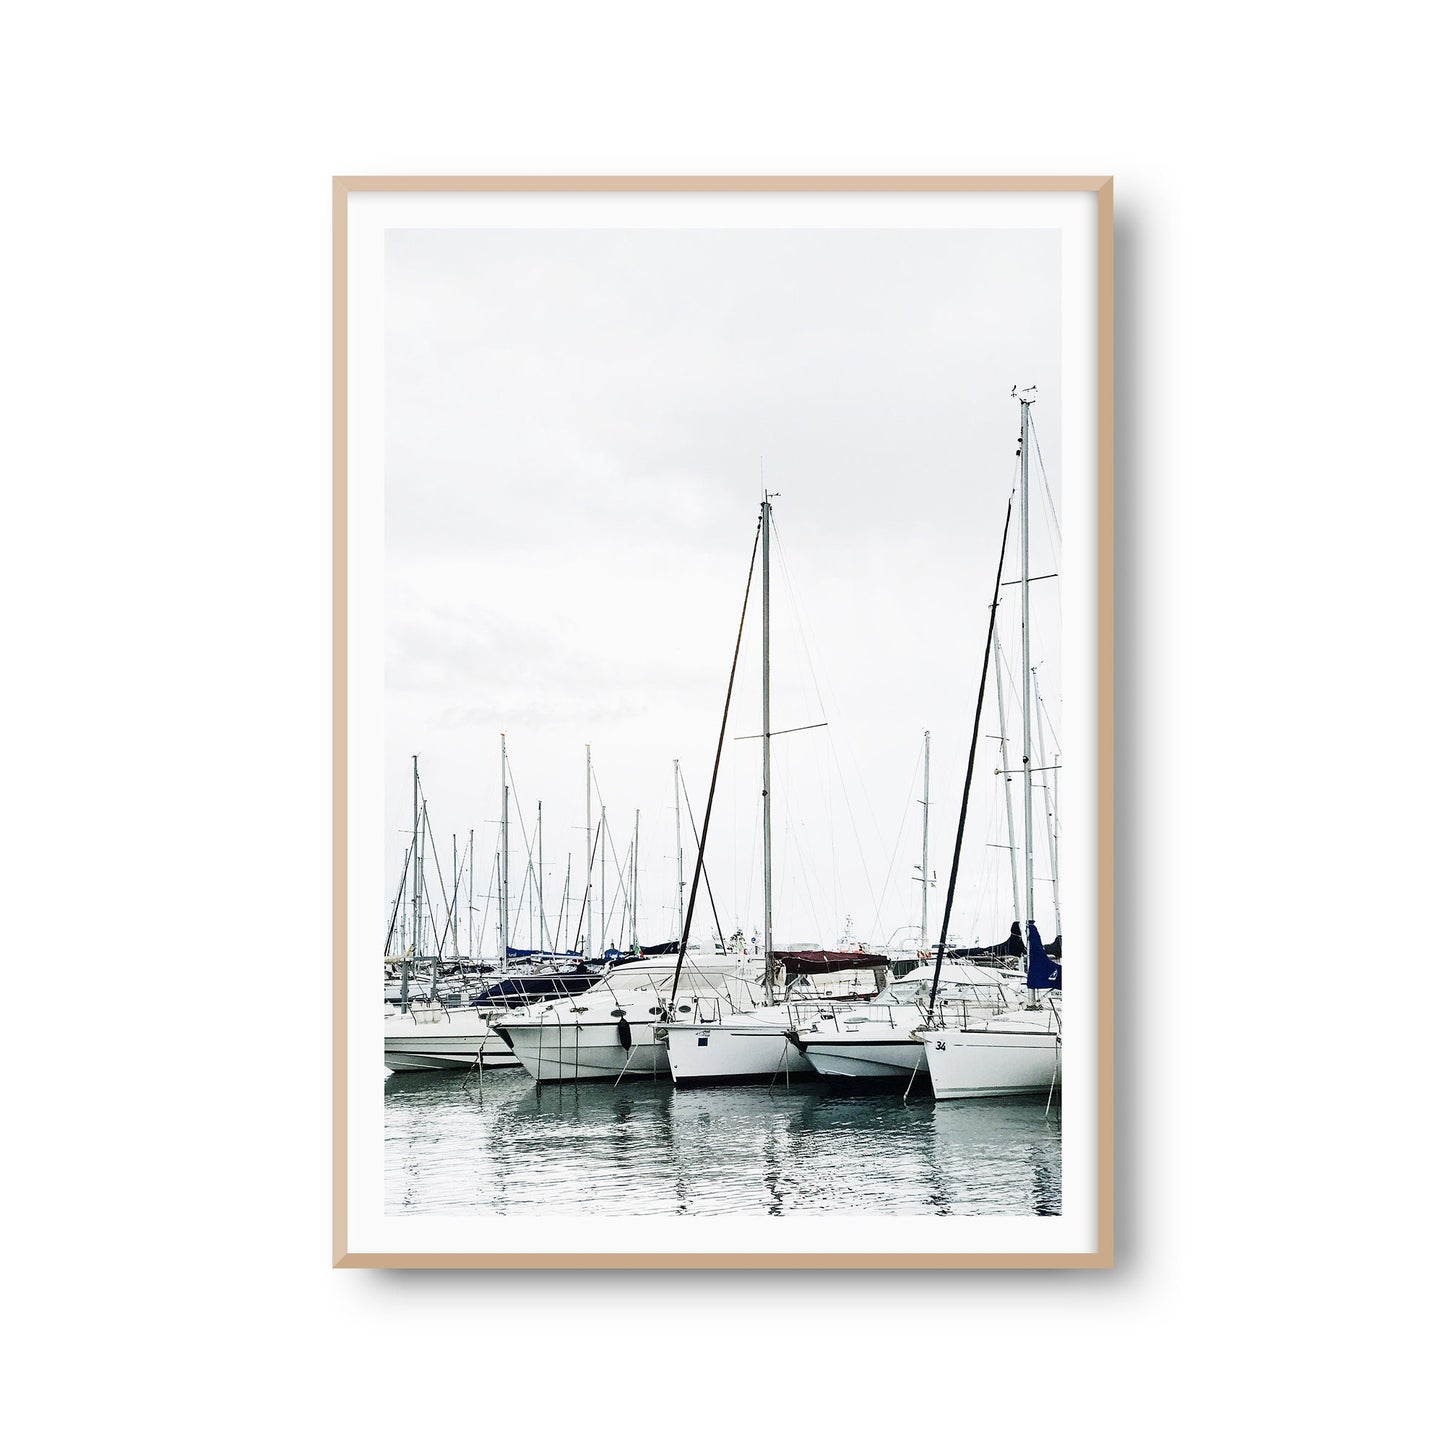 Wanddeko Poster "Segelboote" Hafen Marina Fotoprint Kunstdruck Bild Fotografie Print Wandbild Kunstdruck (OHNE RAHMEN)